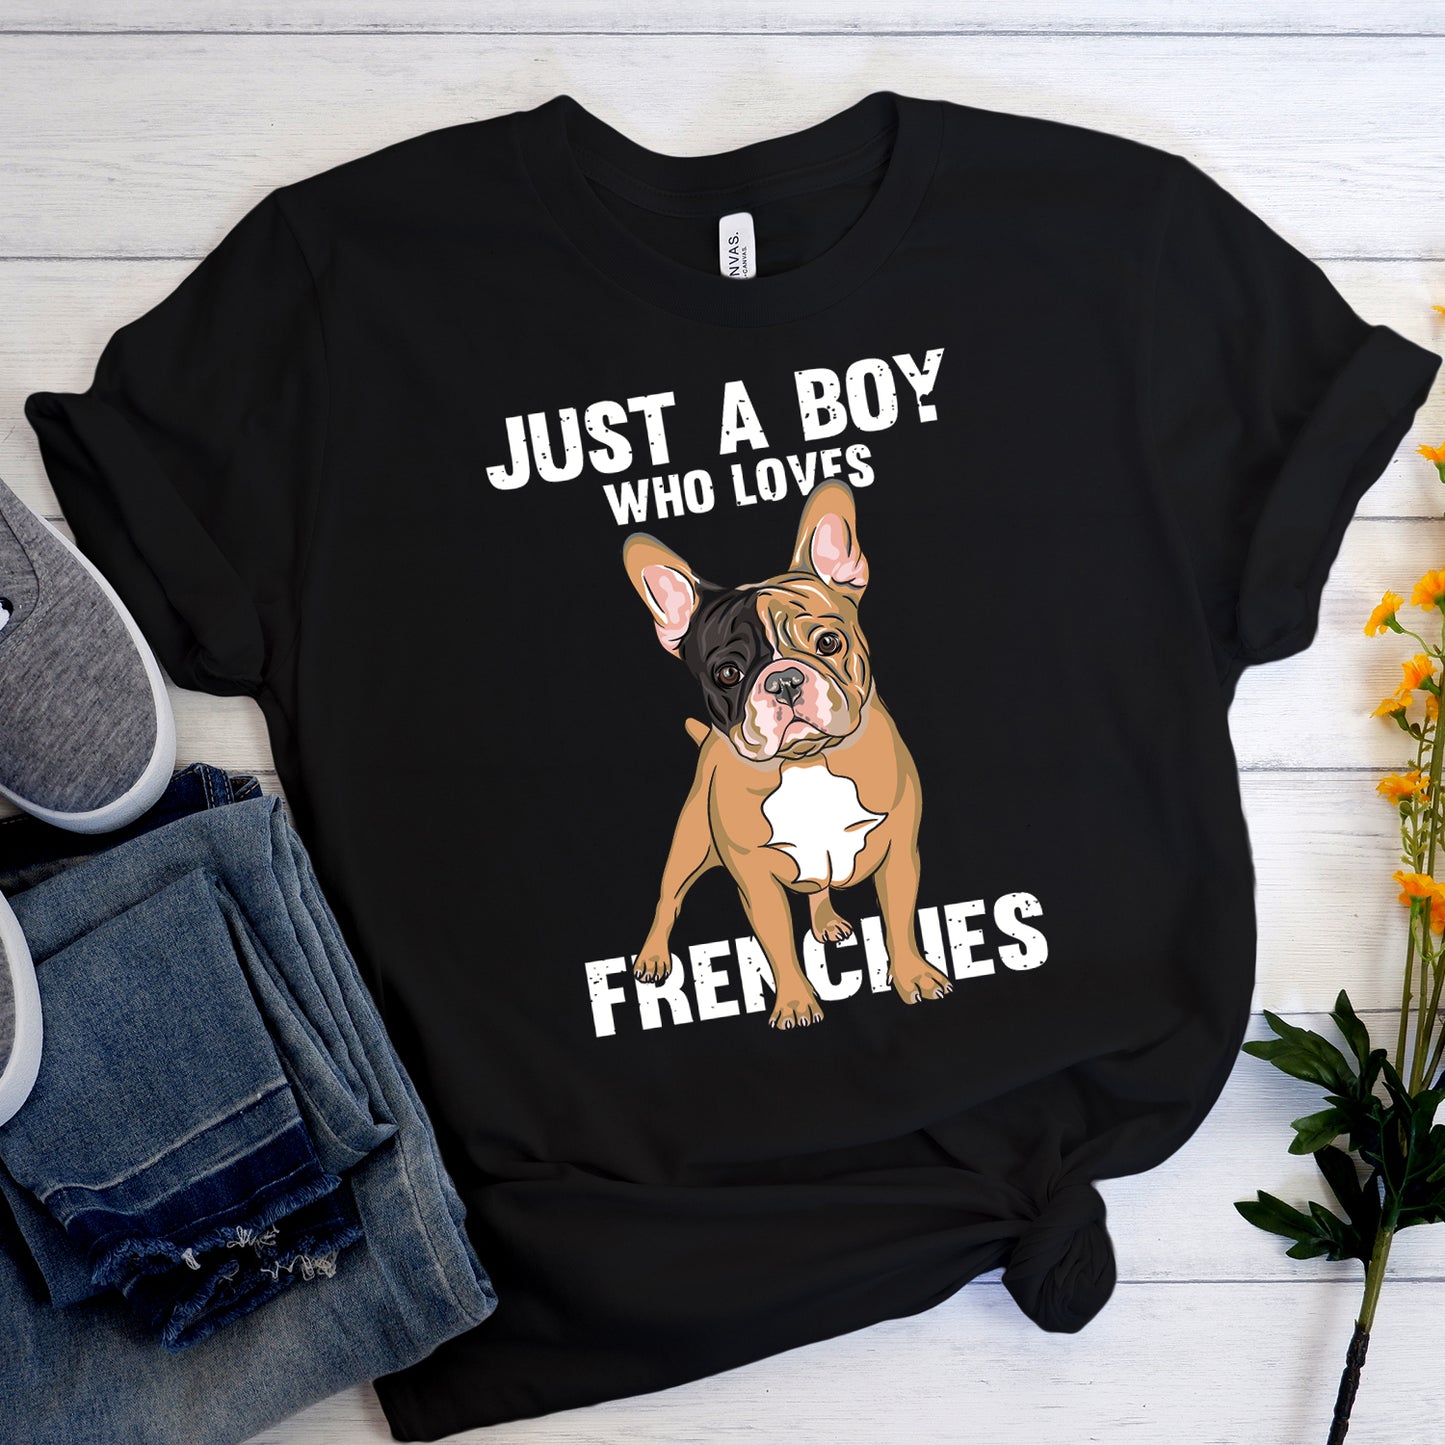 A boy loves Frenchies - Unisex T-Shirt - Frenchie Bulldog Shop